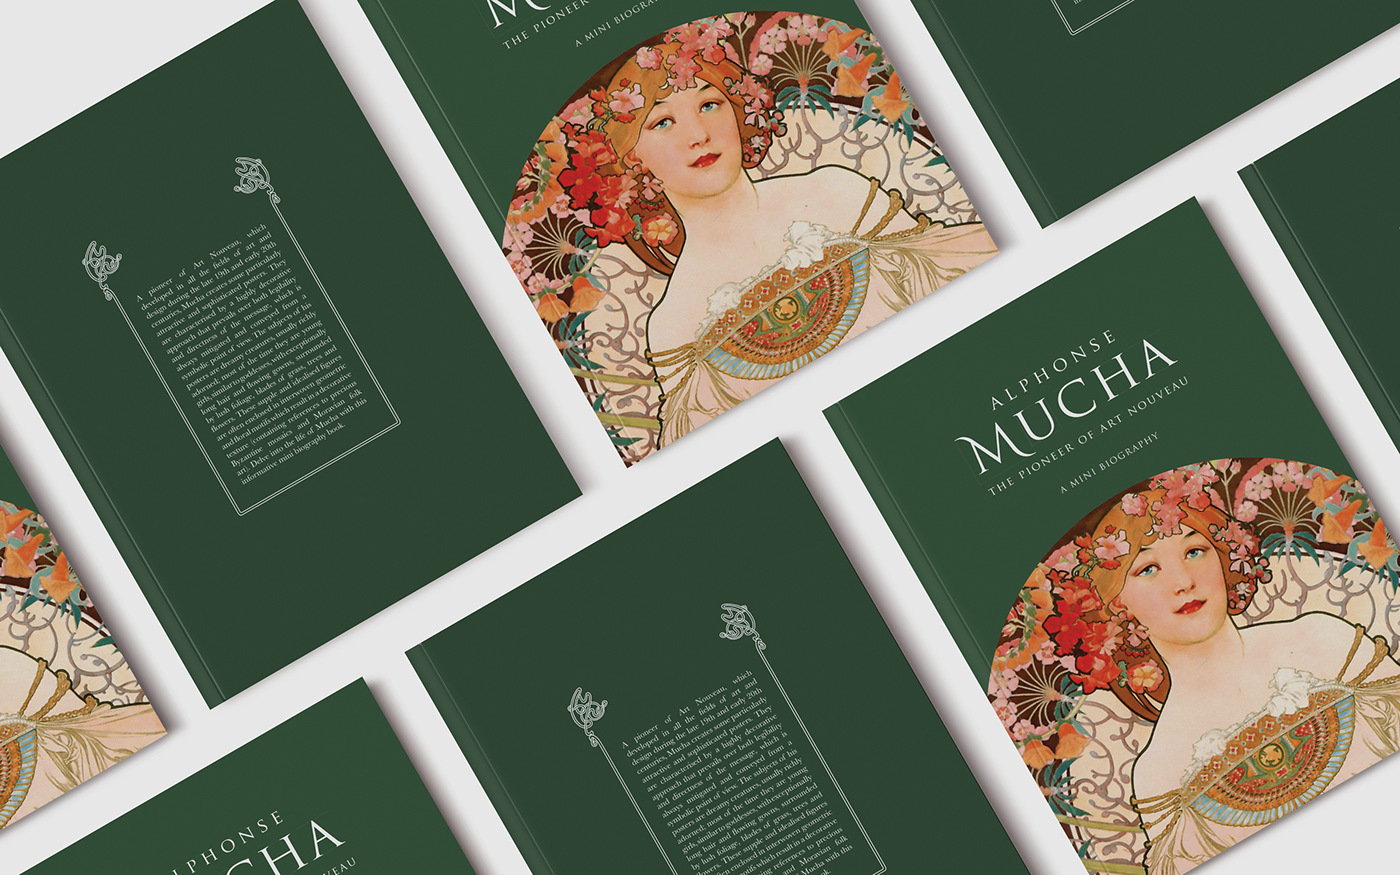 Alphonse Mucha Mucha art nouveau biography Layout Design book design editorial design 